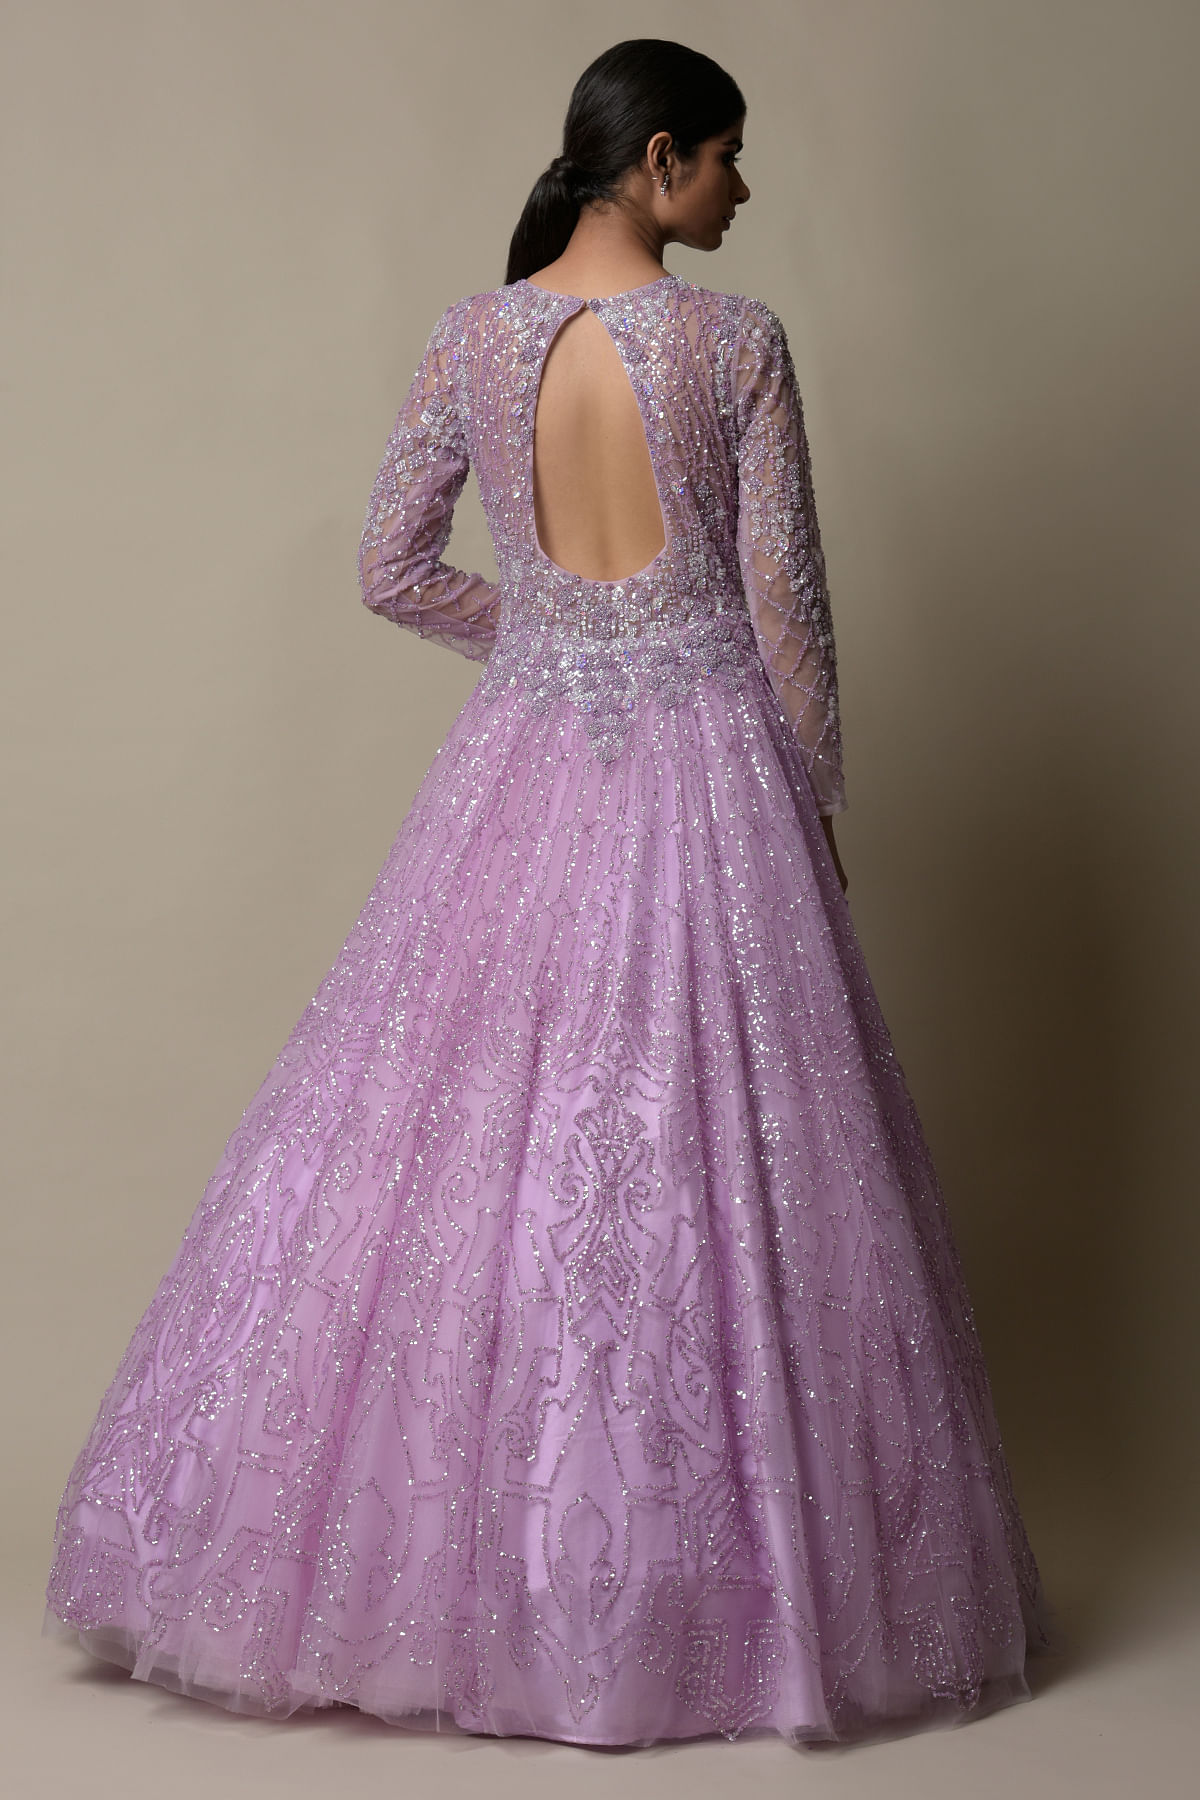 9 Best Purse Colors That Go With a Lilac & Lavender Dress | Purple wedding  dress, Lavender color dress, Lavender dresses